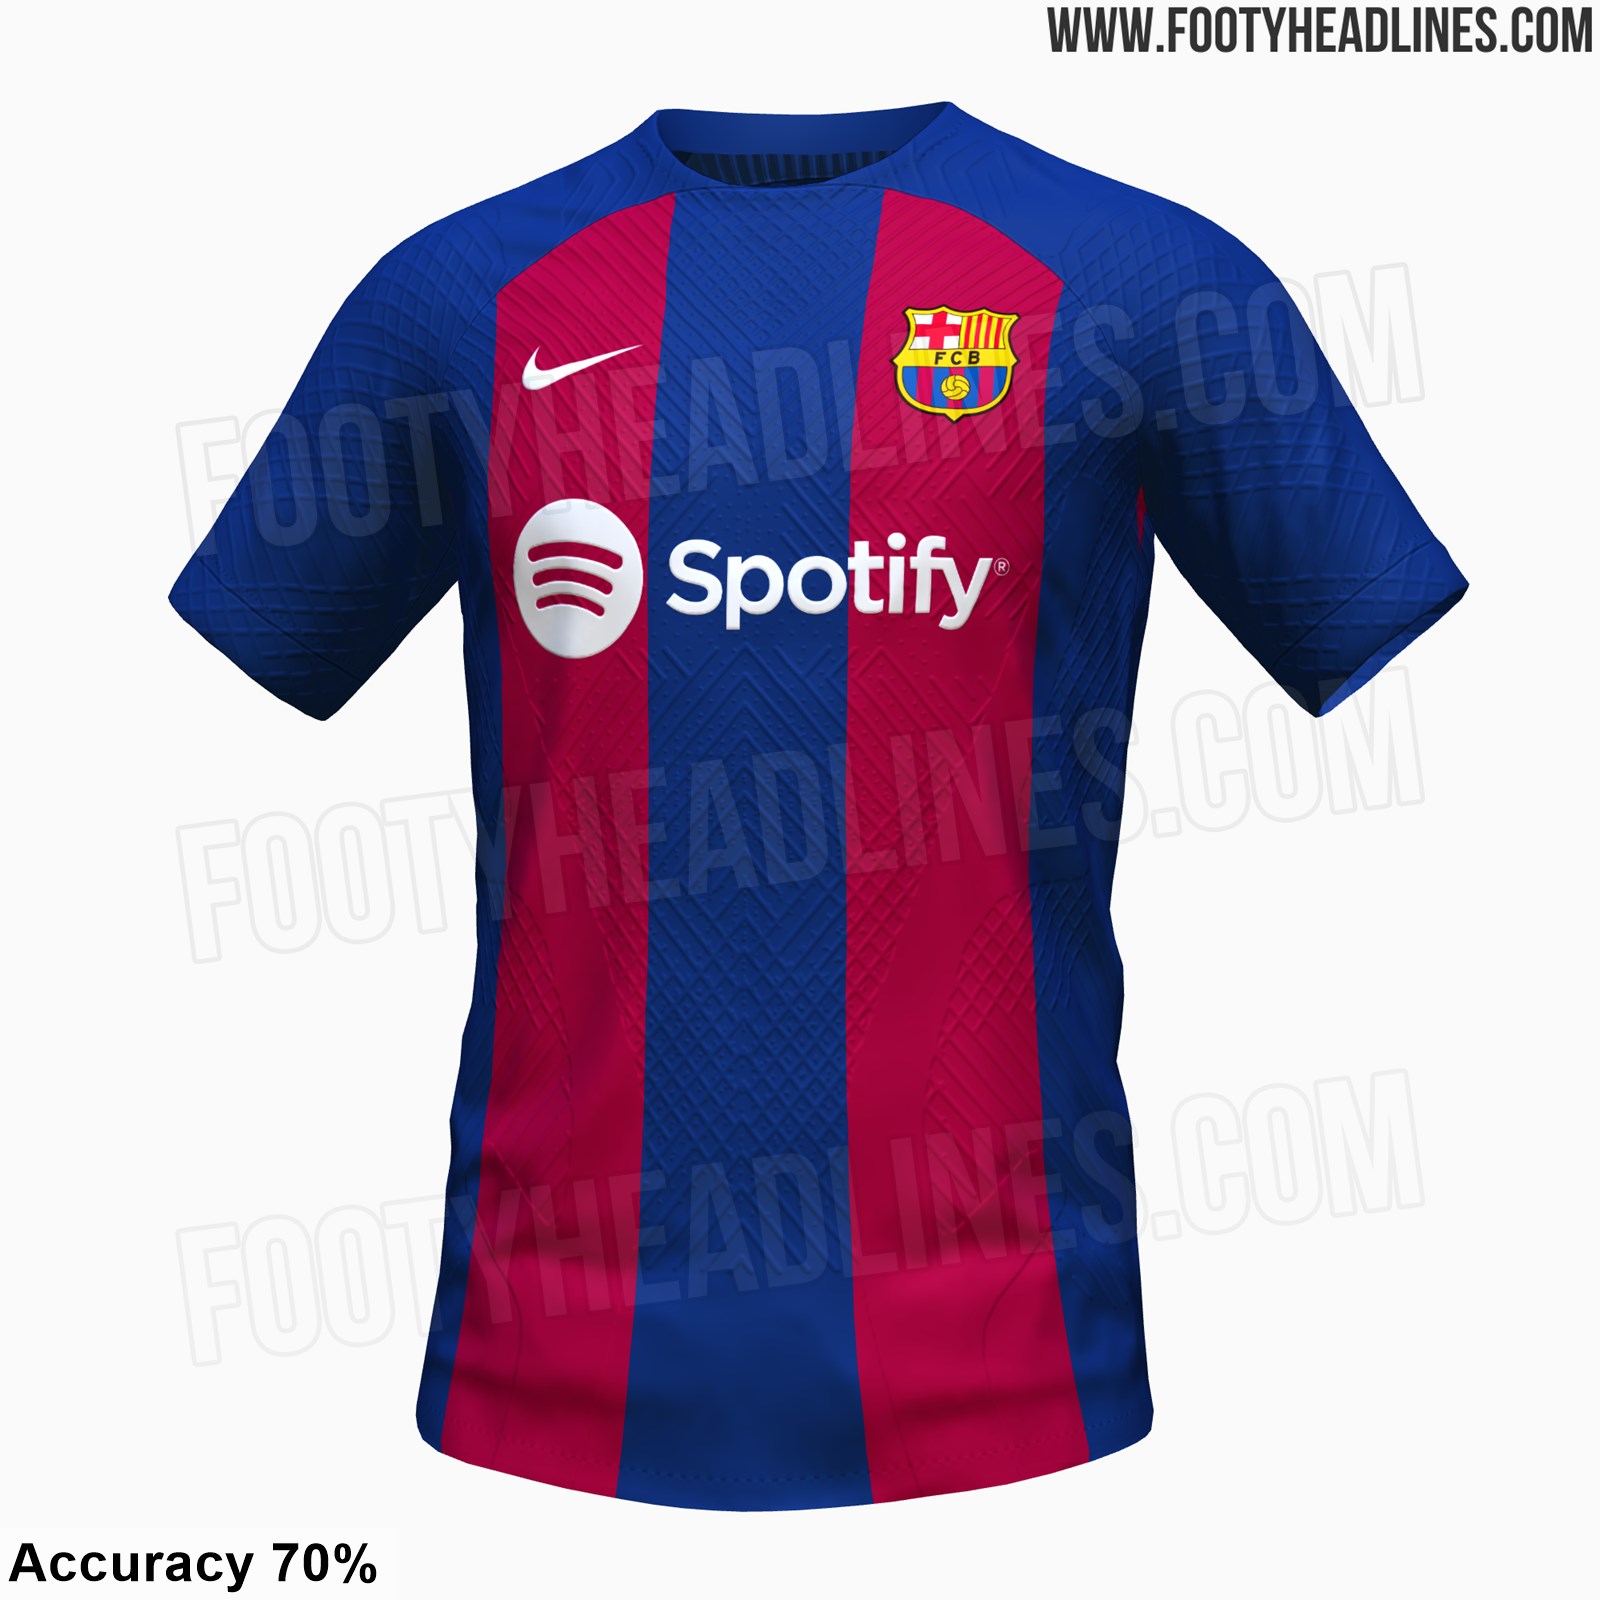 Barcelona 2324 Home and Away Kits Leaked Key Facts Summary Footy